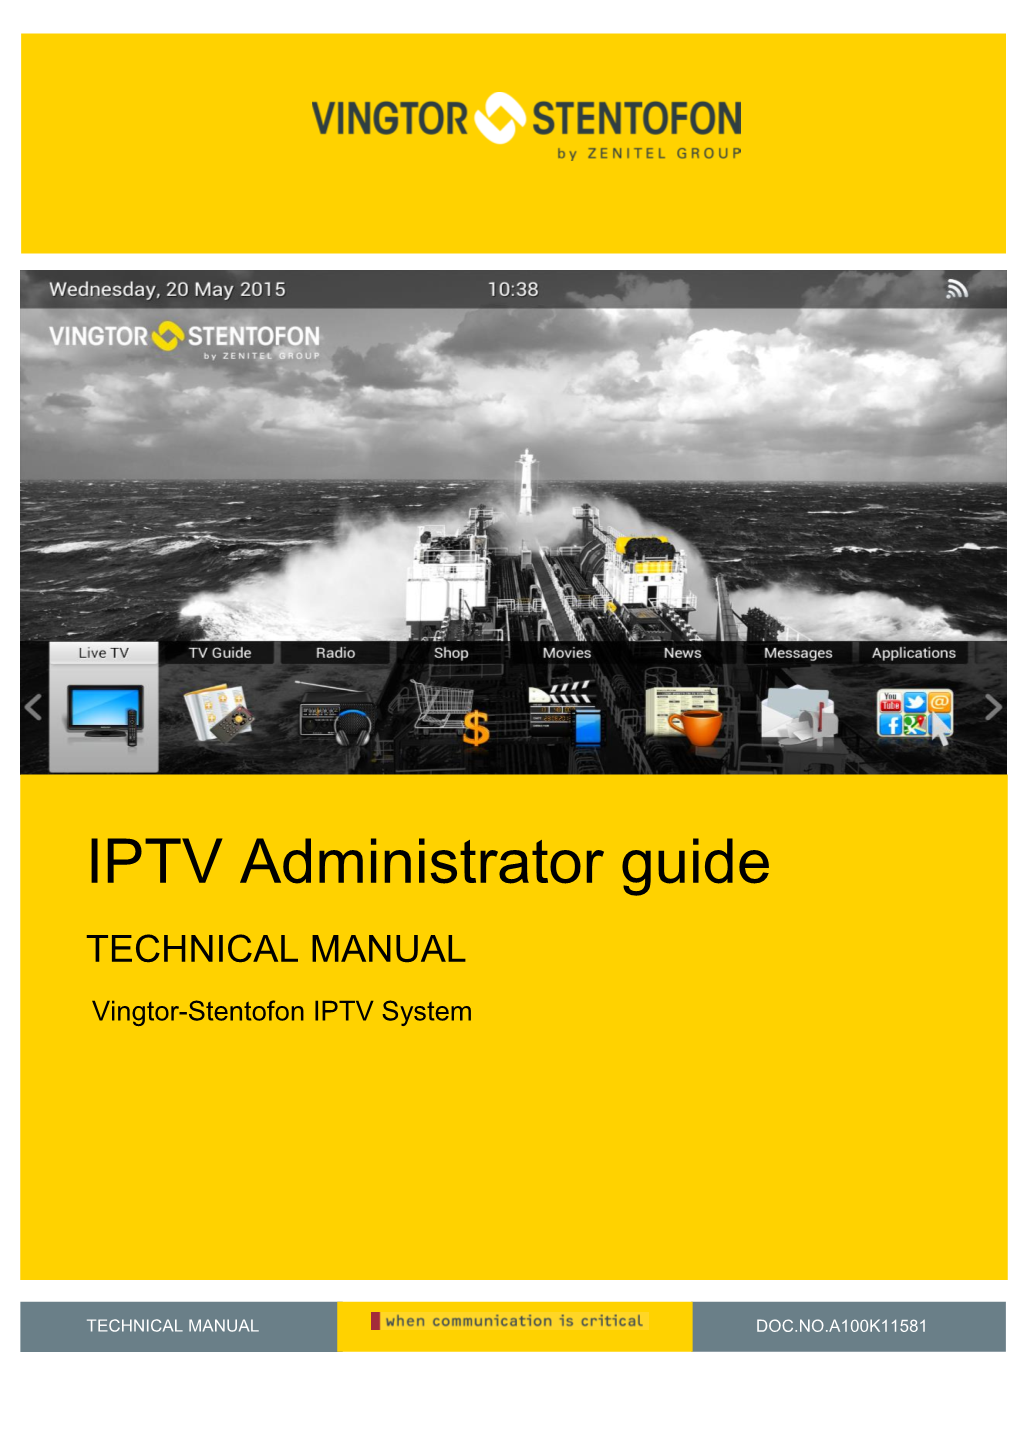 IPTV Administrator Guide TECHNICAL MANUAL